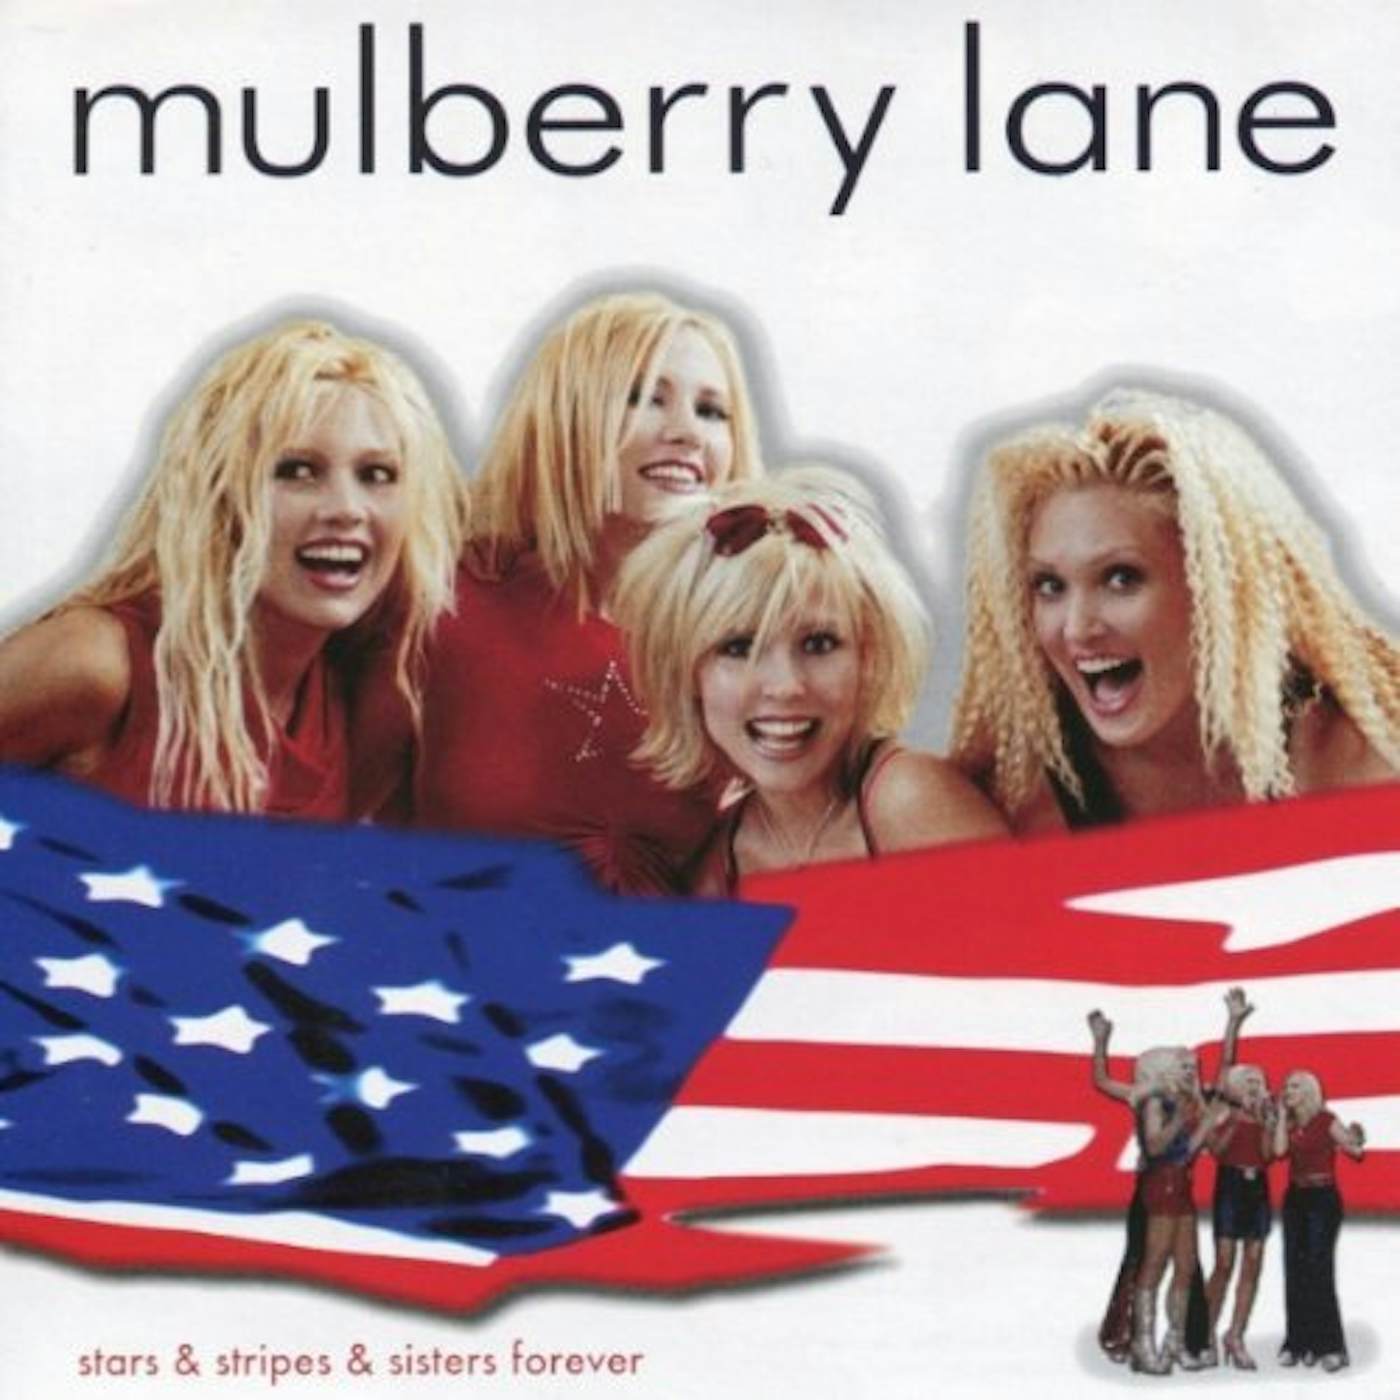 Mulberry Lane STARS & STRIPES & SISTERS FOREVER CD